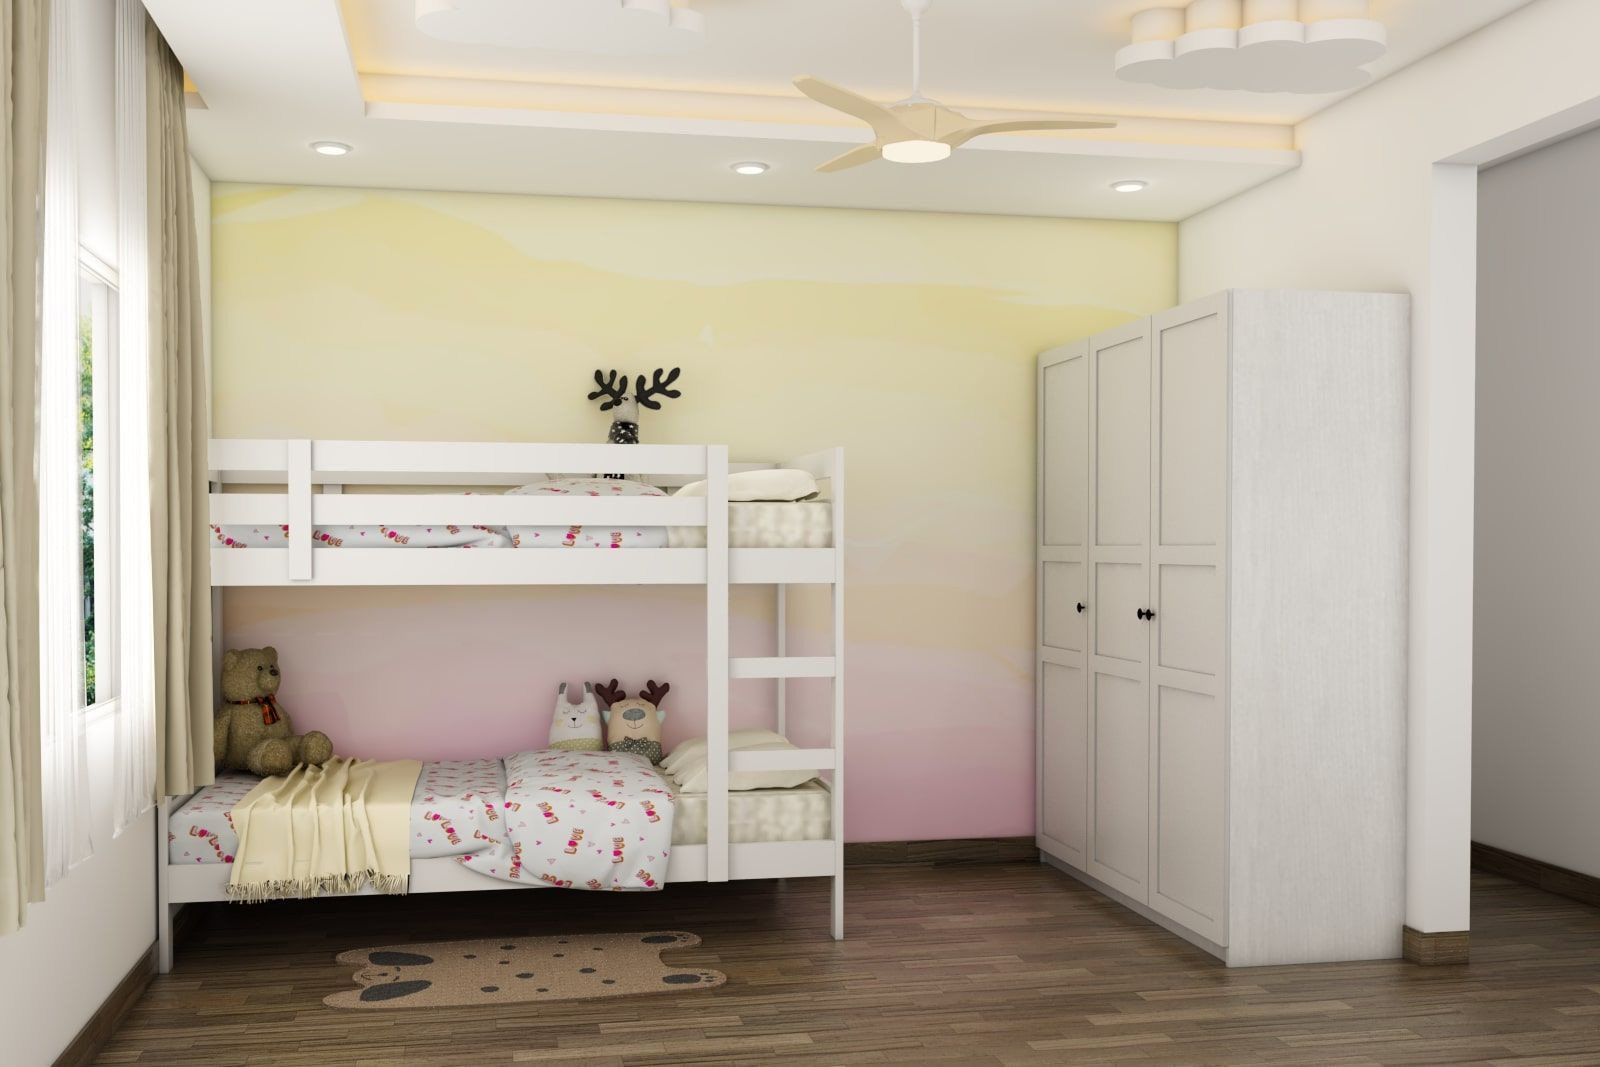 Plus-Minus False Ceiling Design For Kids Bedrooms